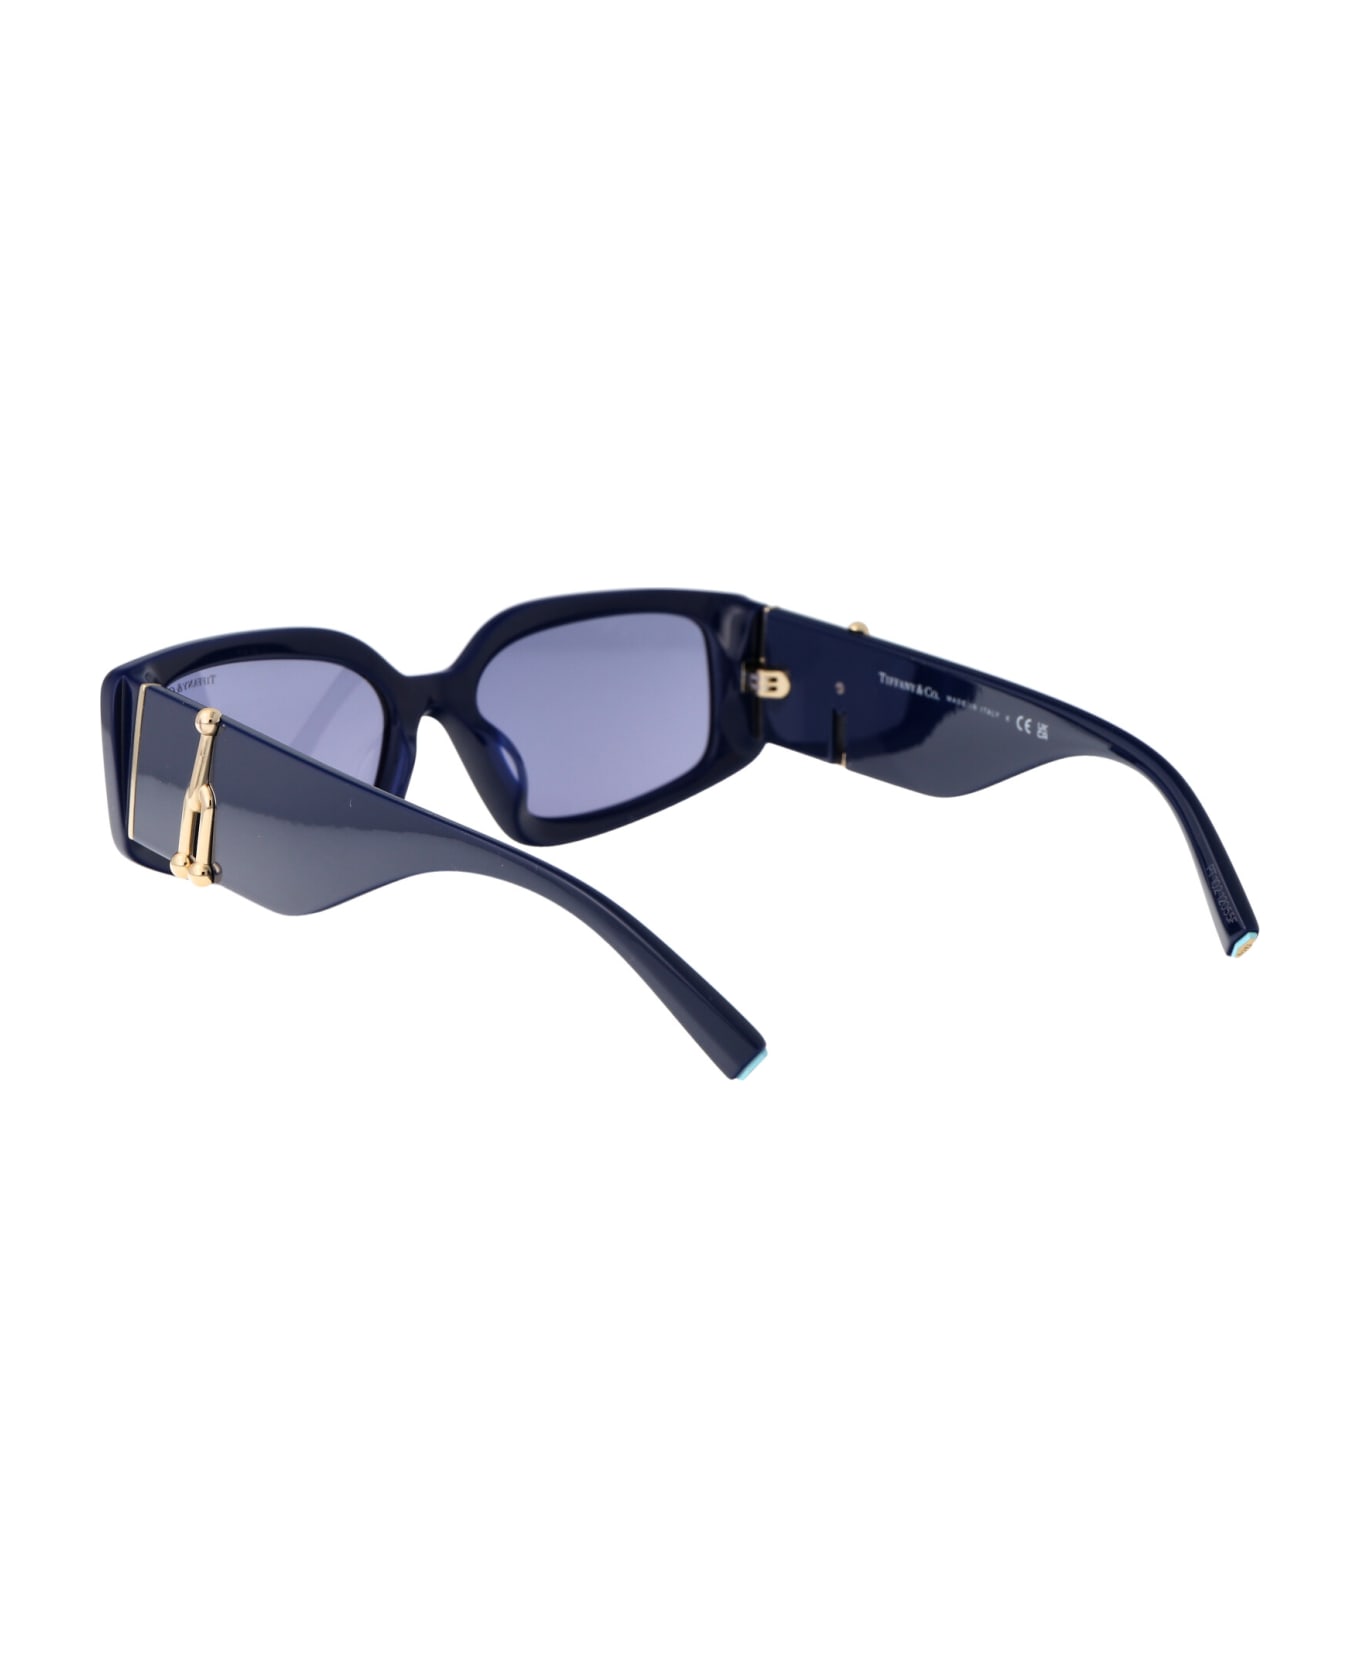 Tiffany & Co. 0tf4208u Sunglasses - 83852S Spectrum Blue